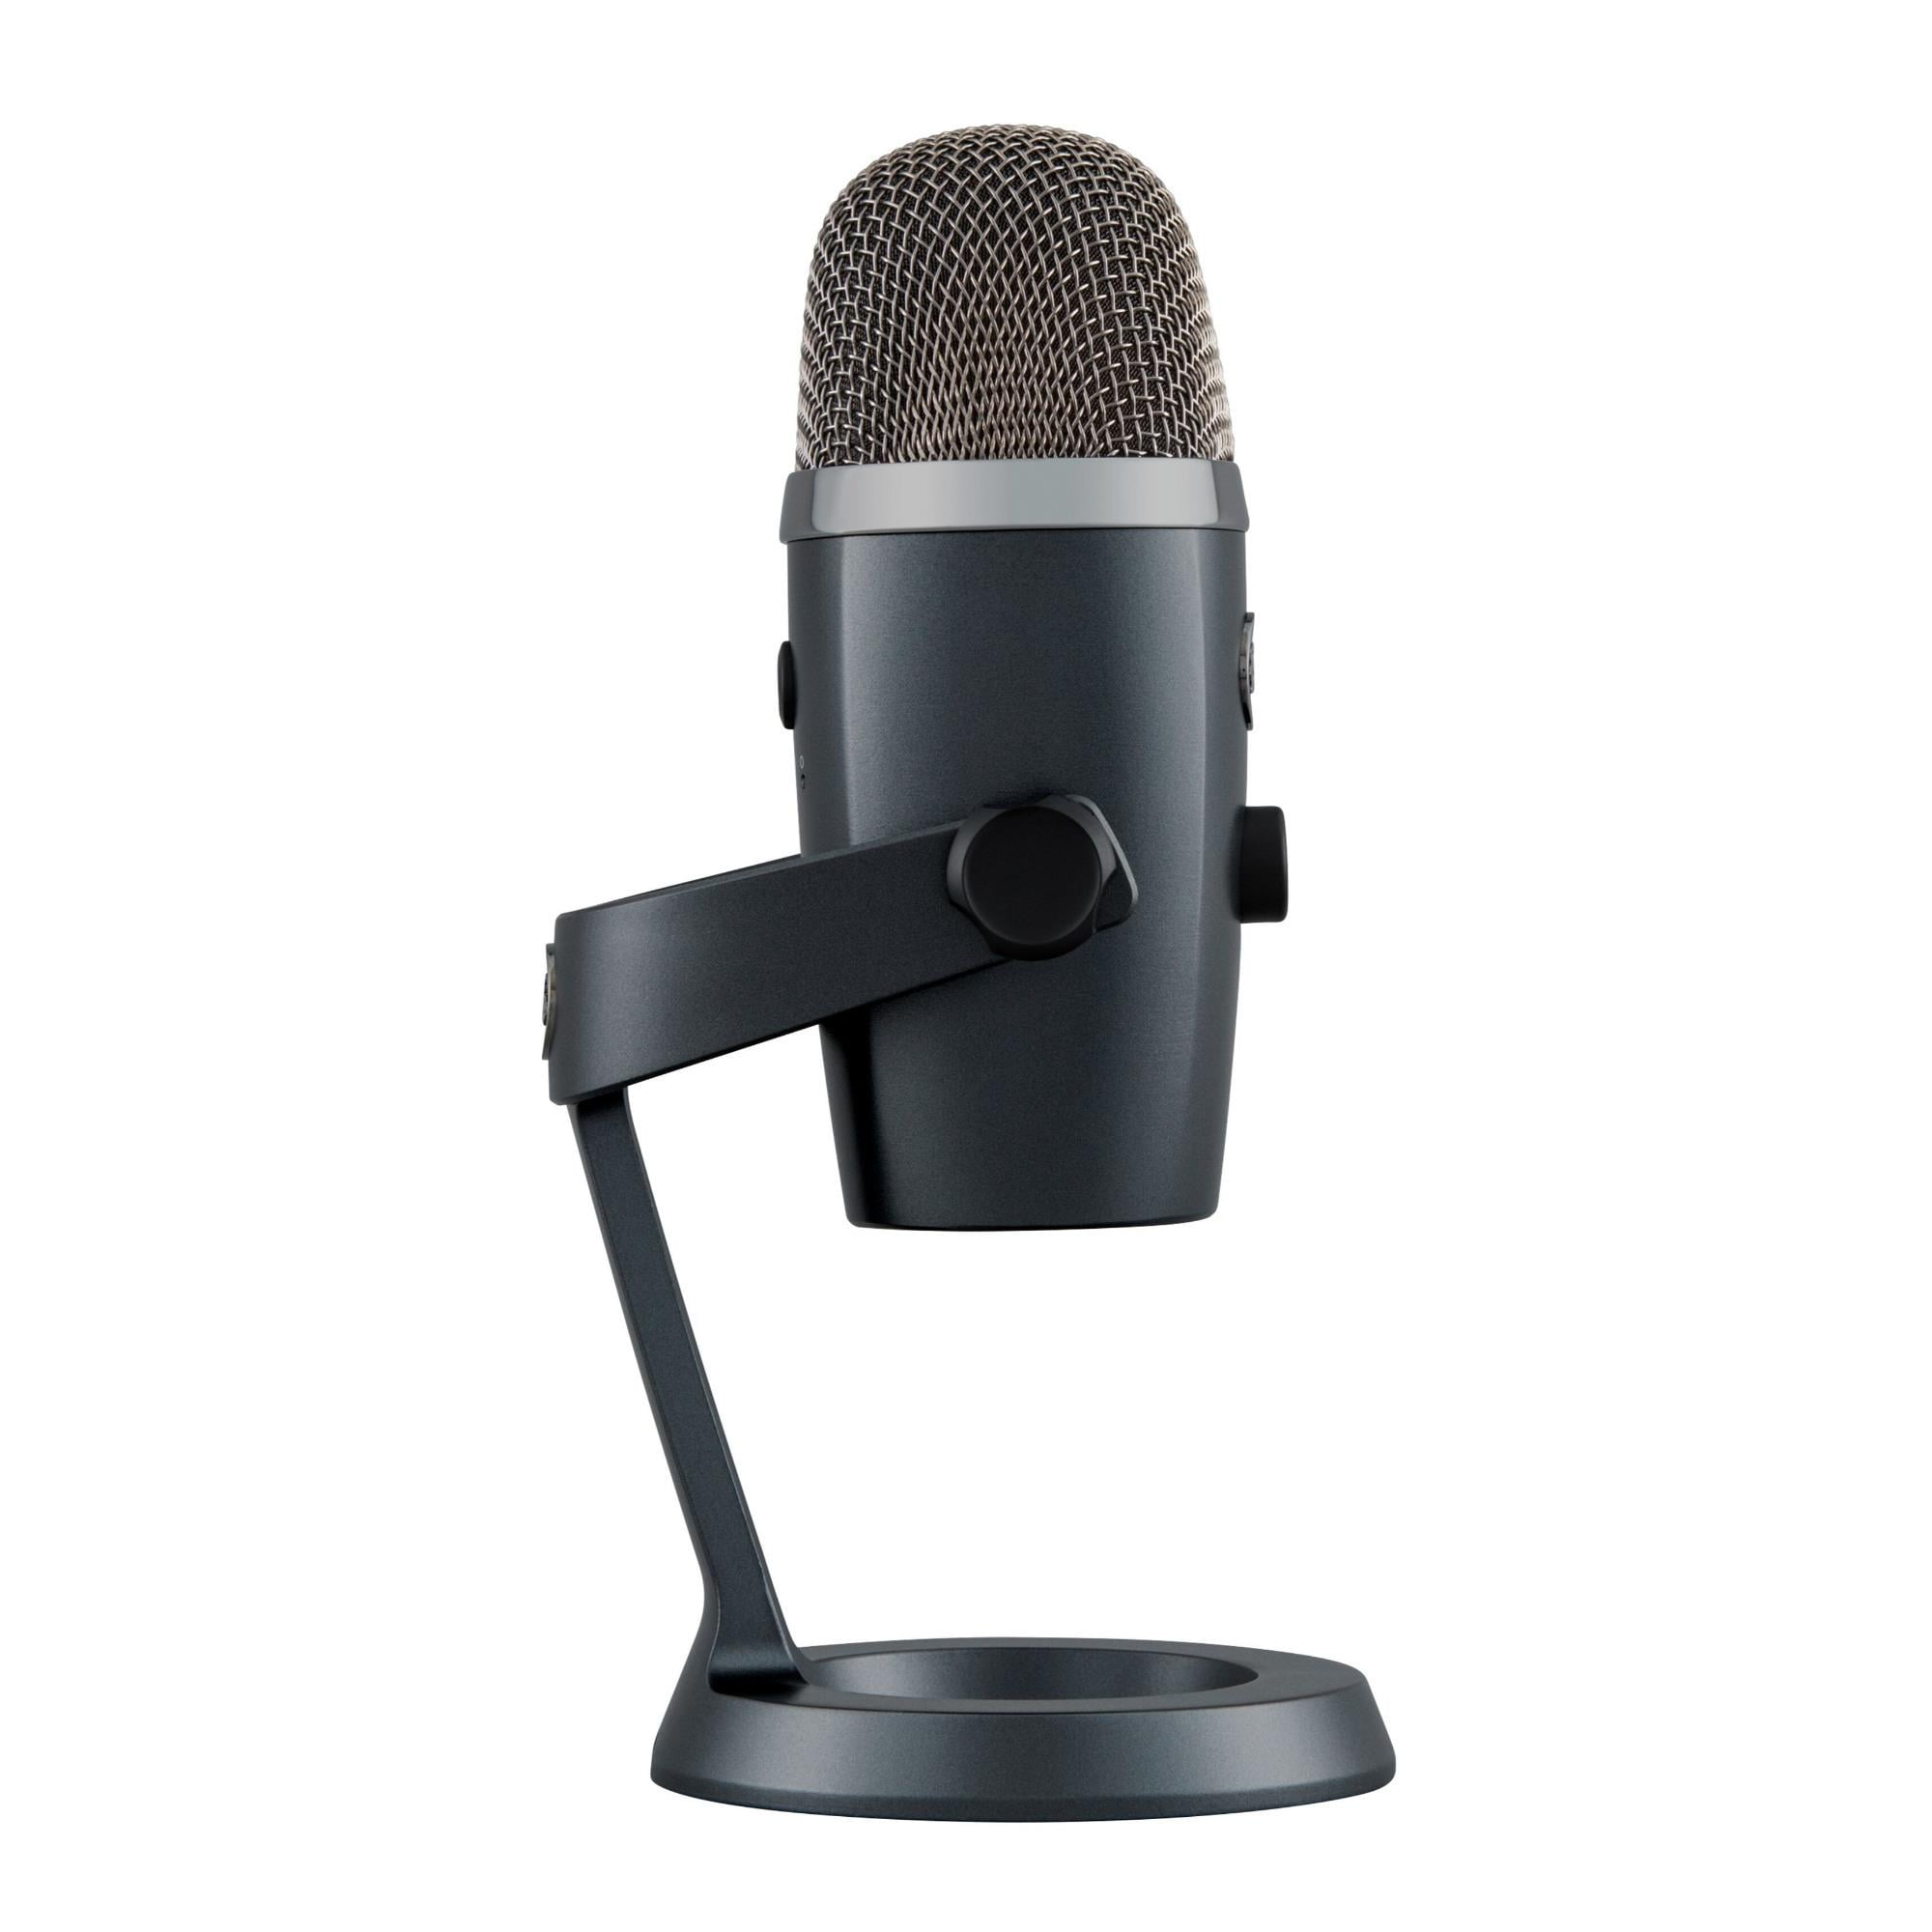 BLUE Yeti Nano USB Microphone, Shadow Gray. #R0893